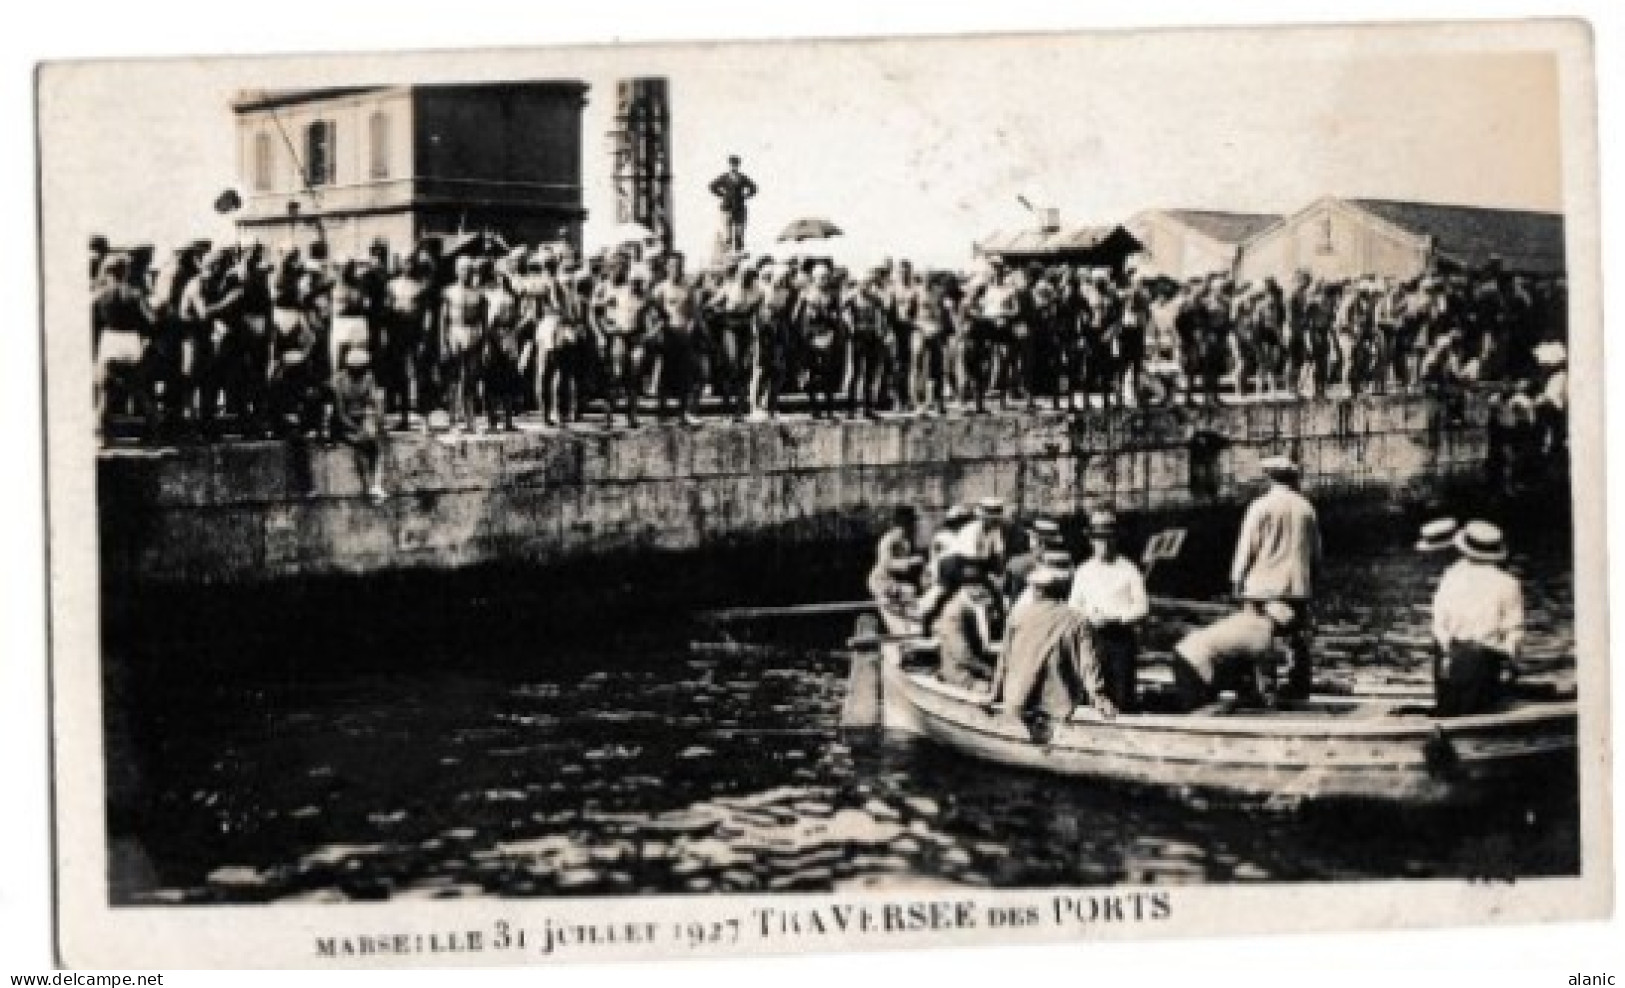 CPA-NATATION-MARSEILLE  TRAVERSEE DES PORTS-31 JUILLET 1927-Animée- Non Circulée-BE - Schwimmen